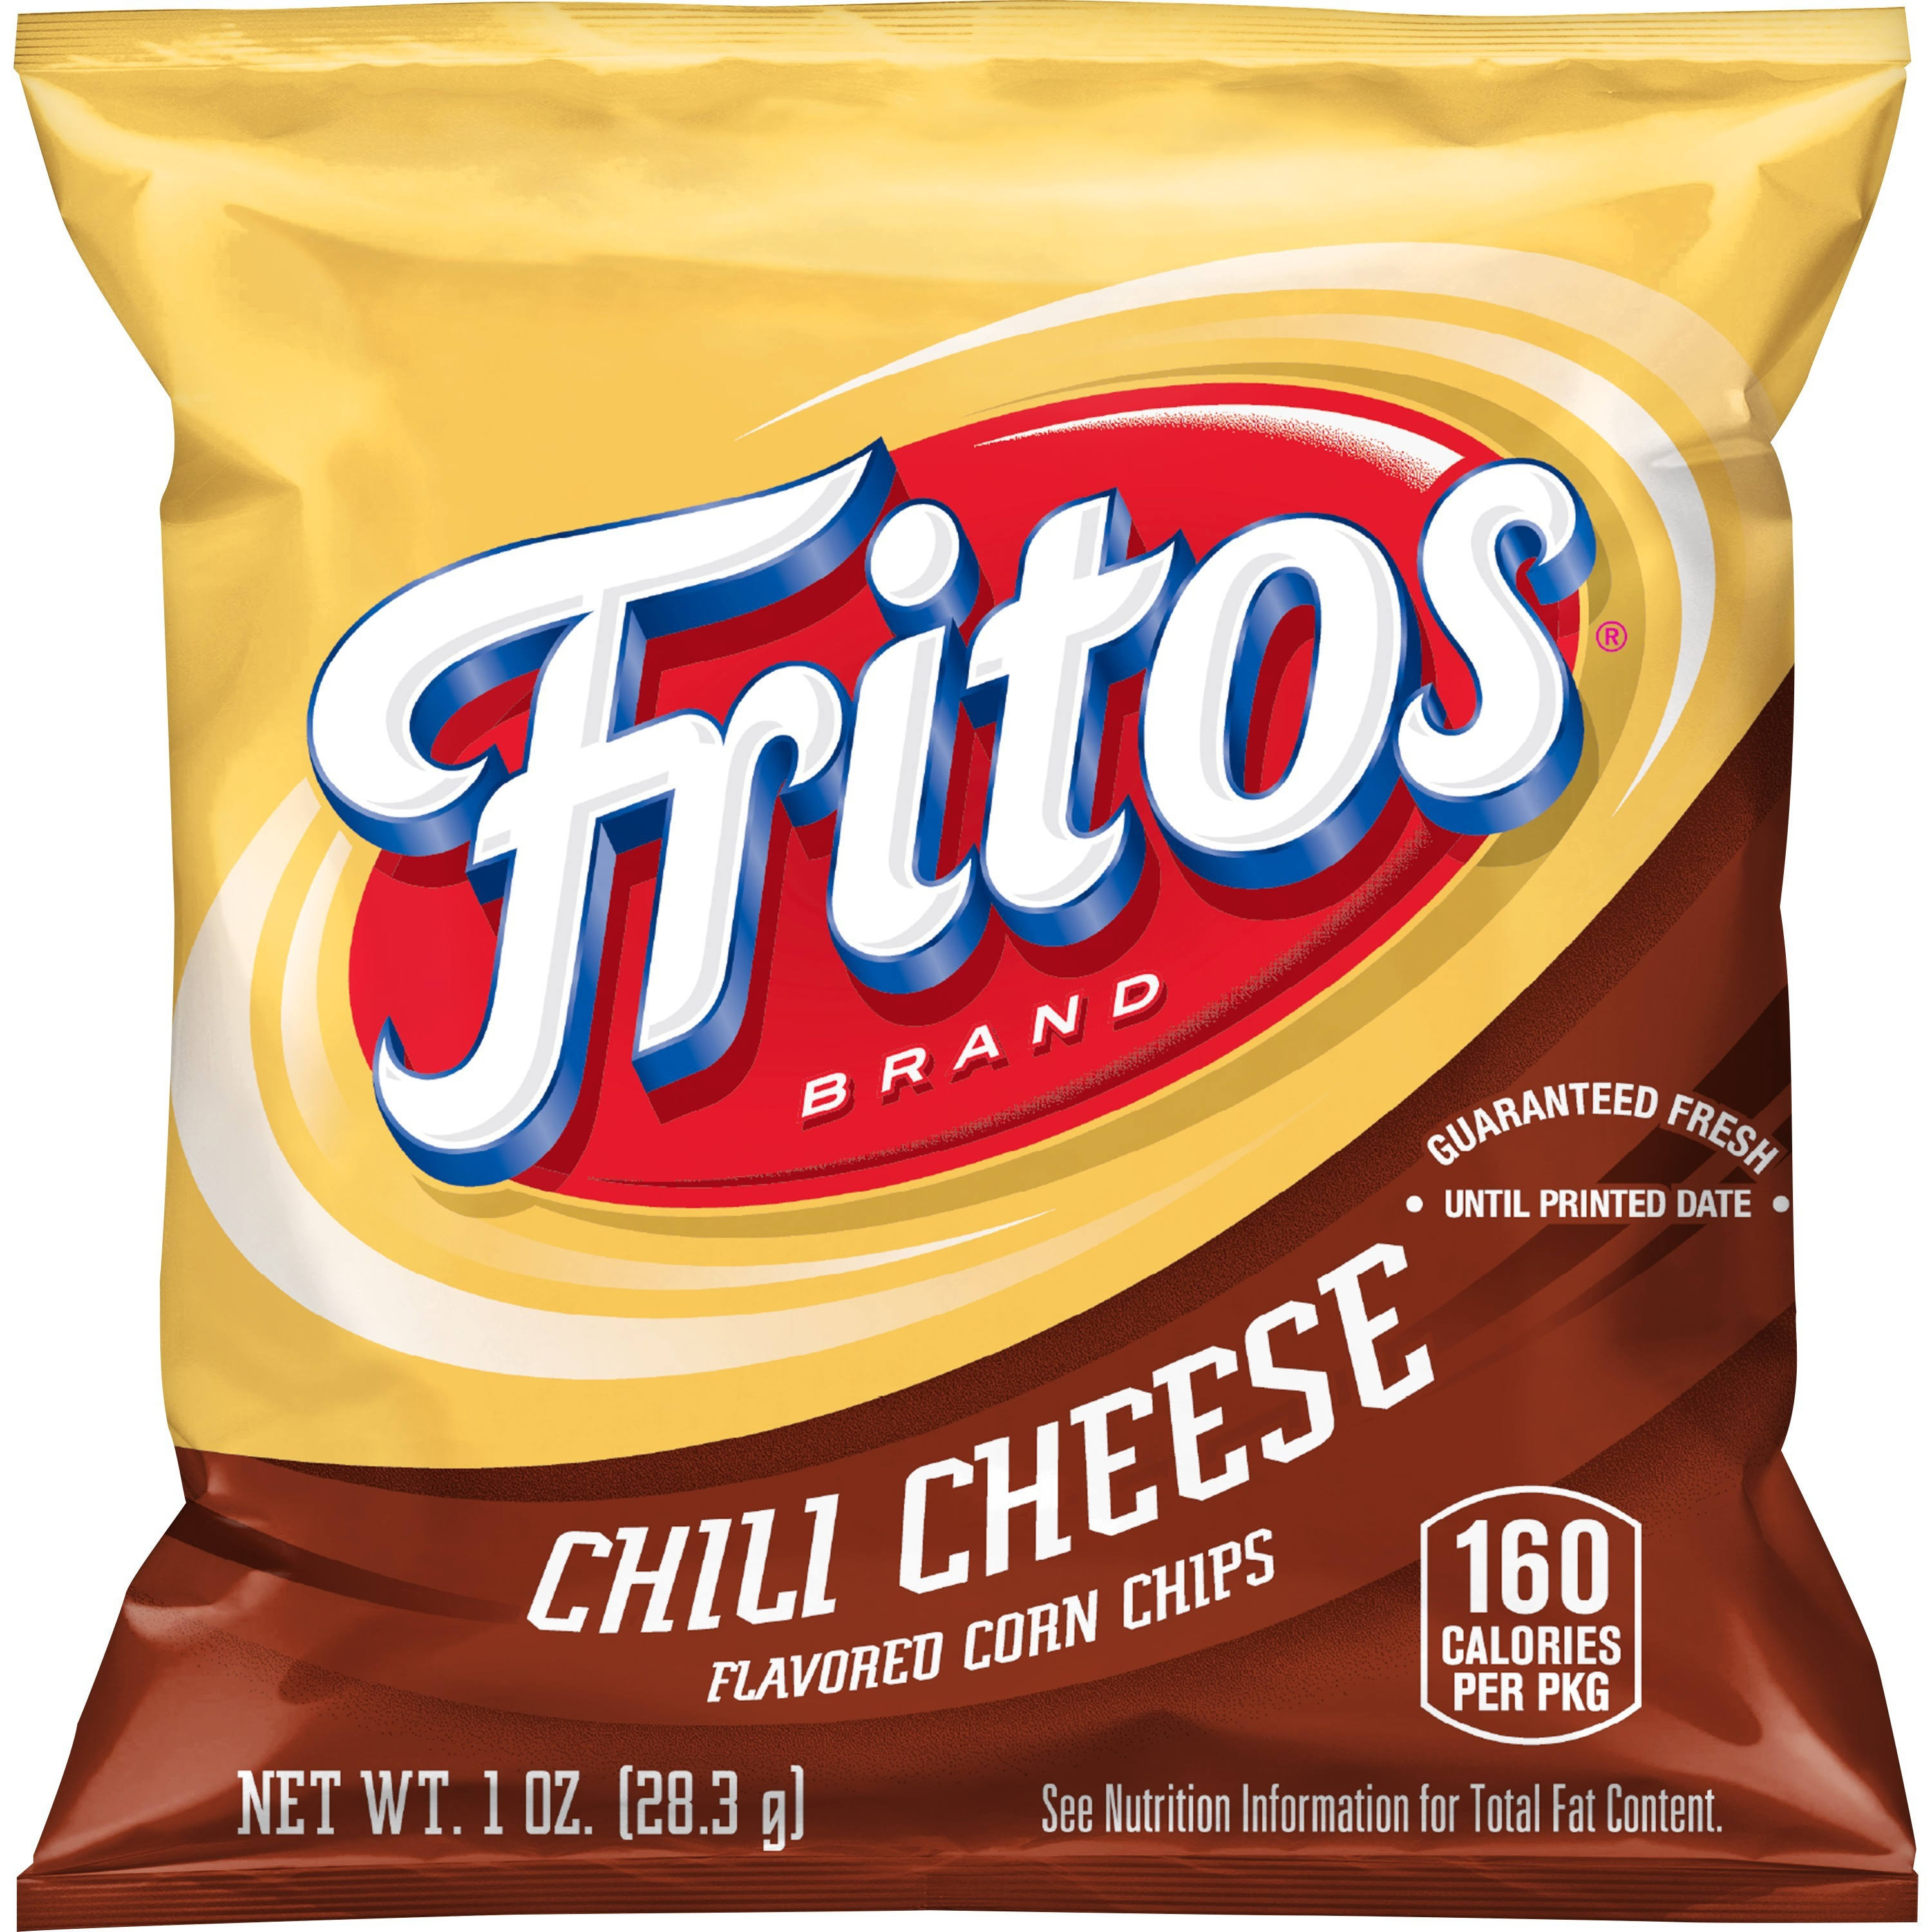 Fritos Corn Chips - Chili Cheese, 28.3g